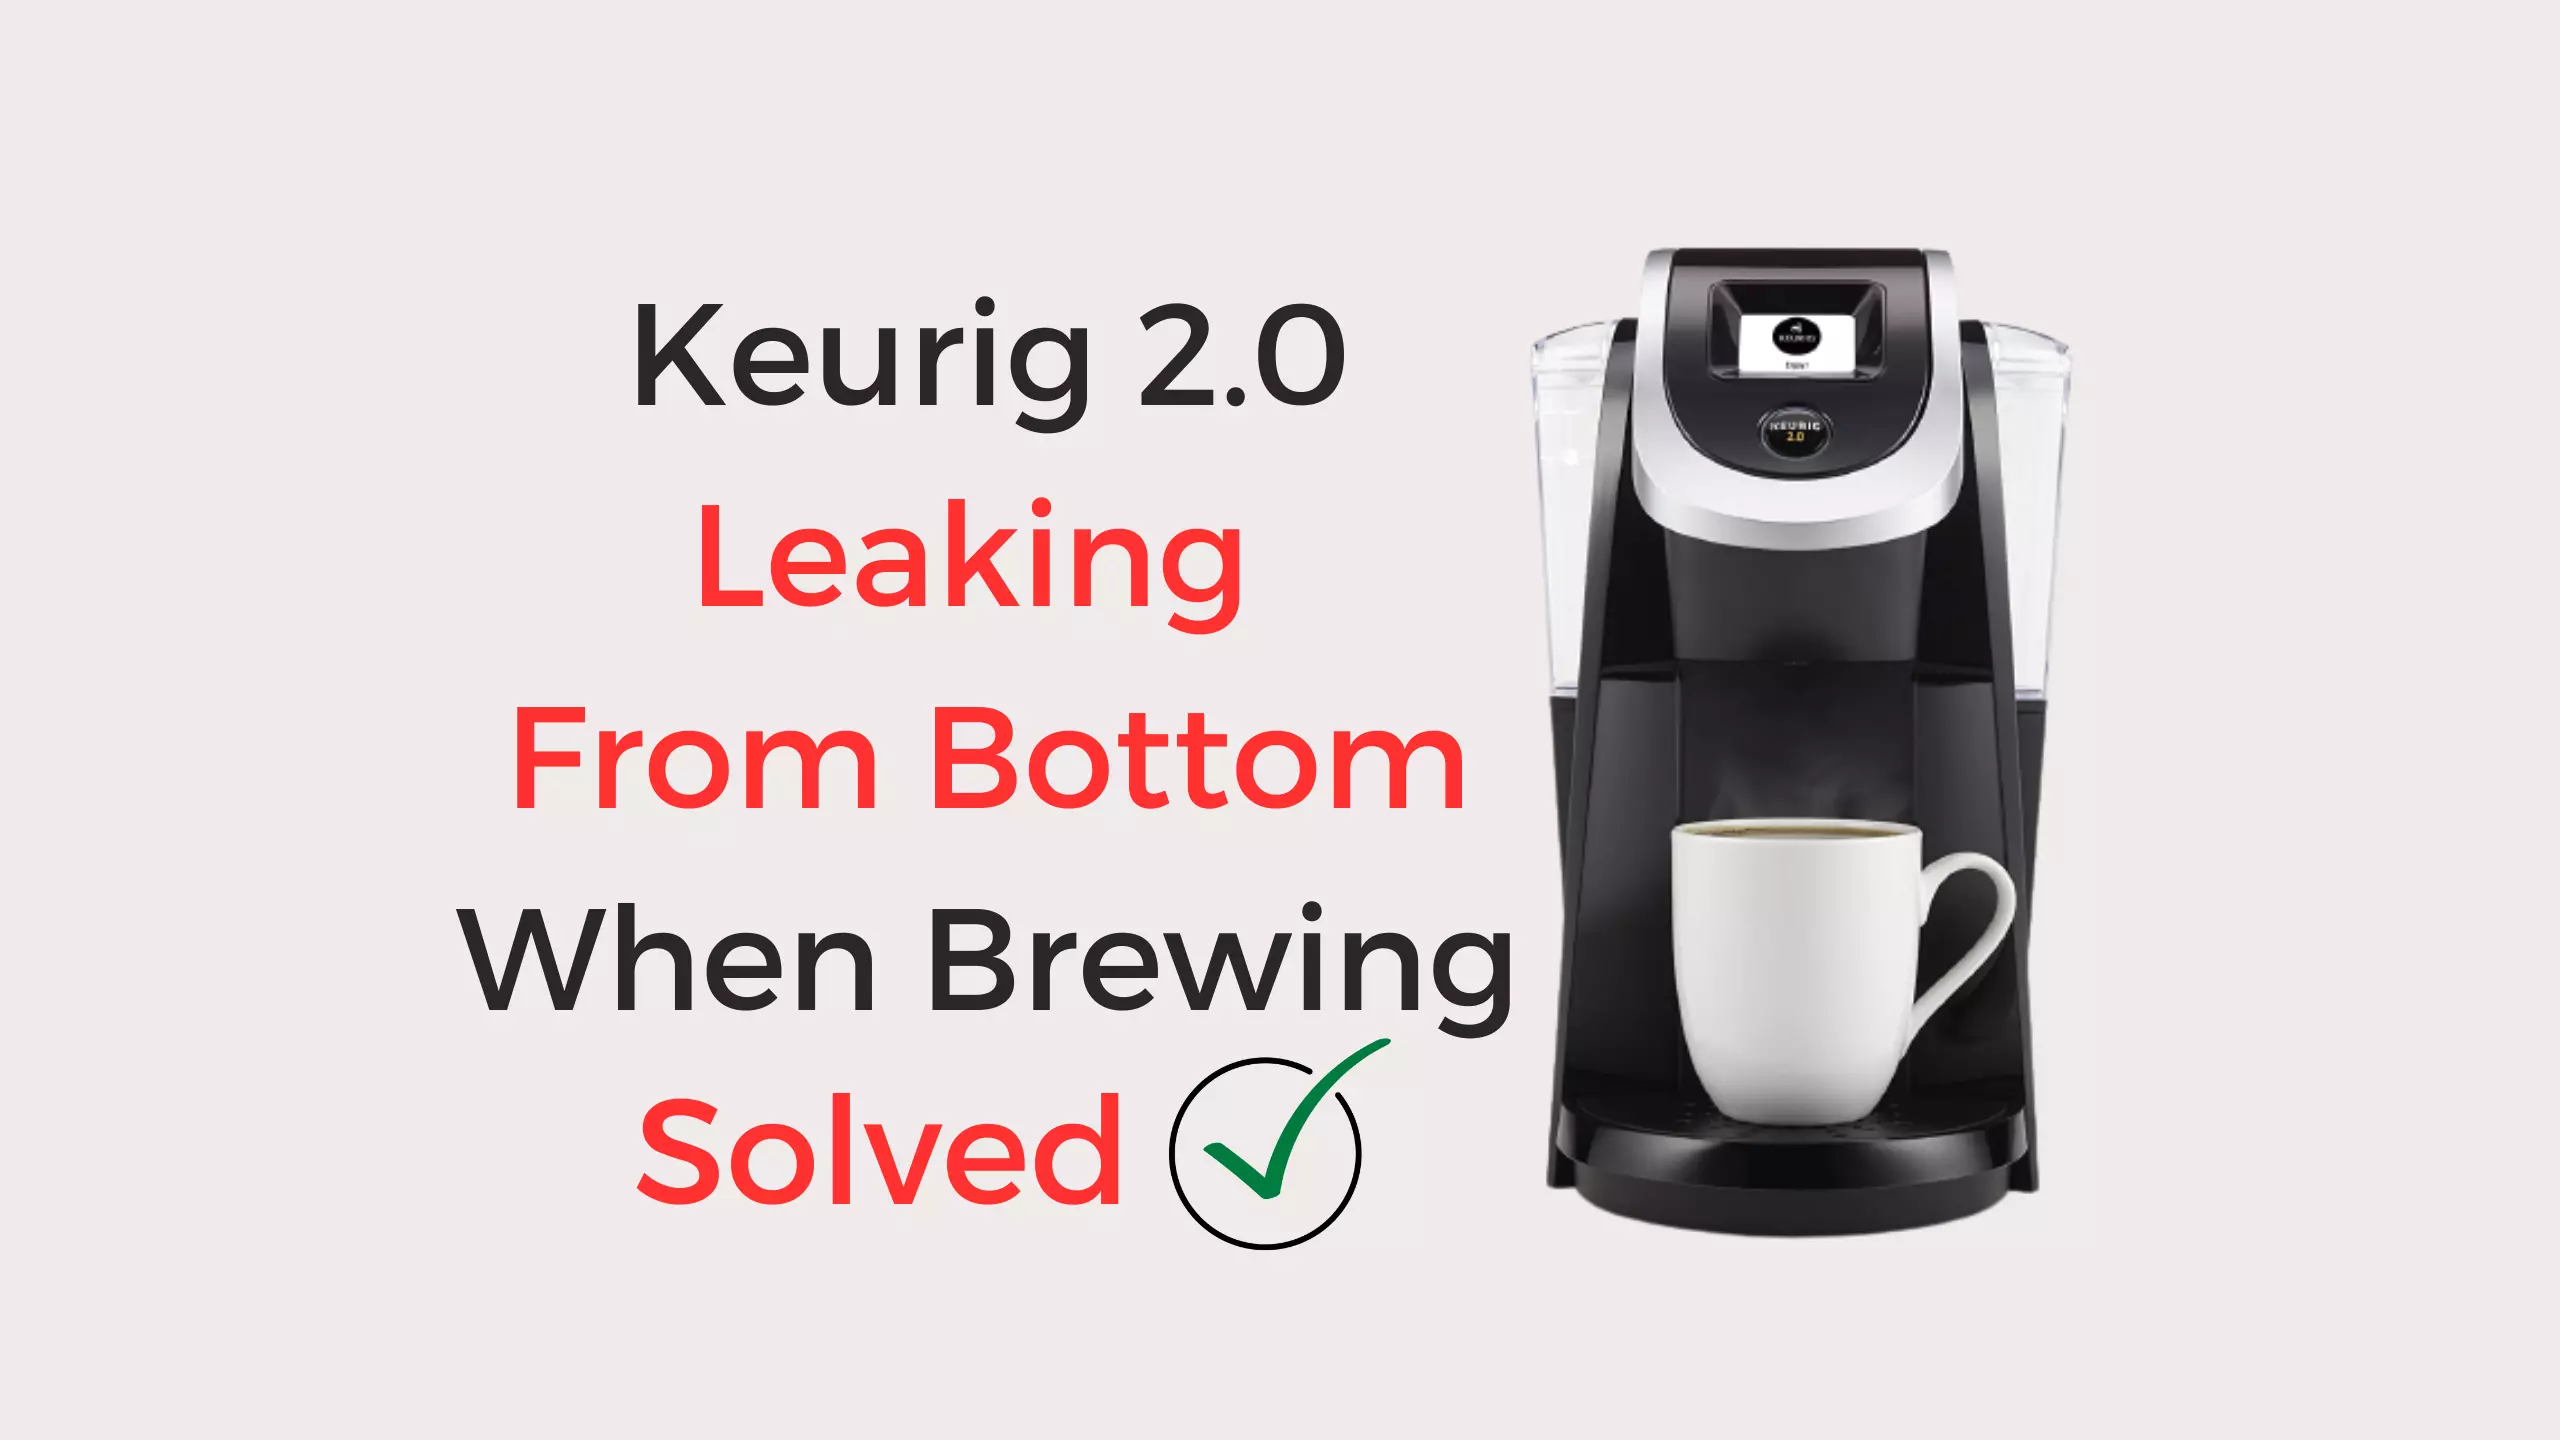 keurig 2.0 leaking from bottom when brewing